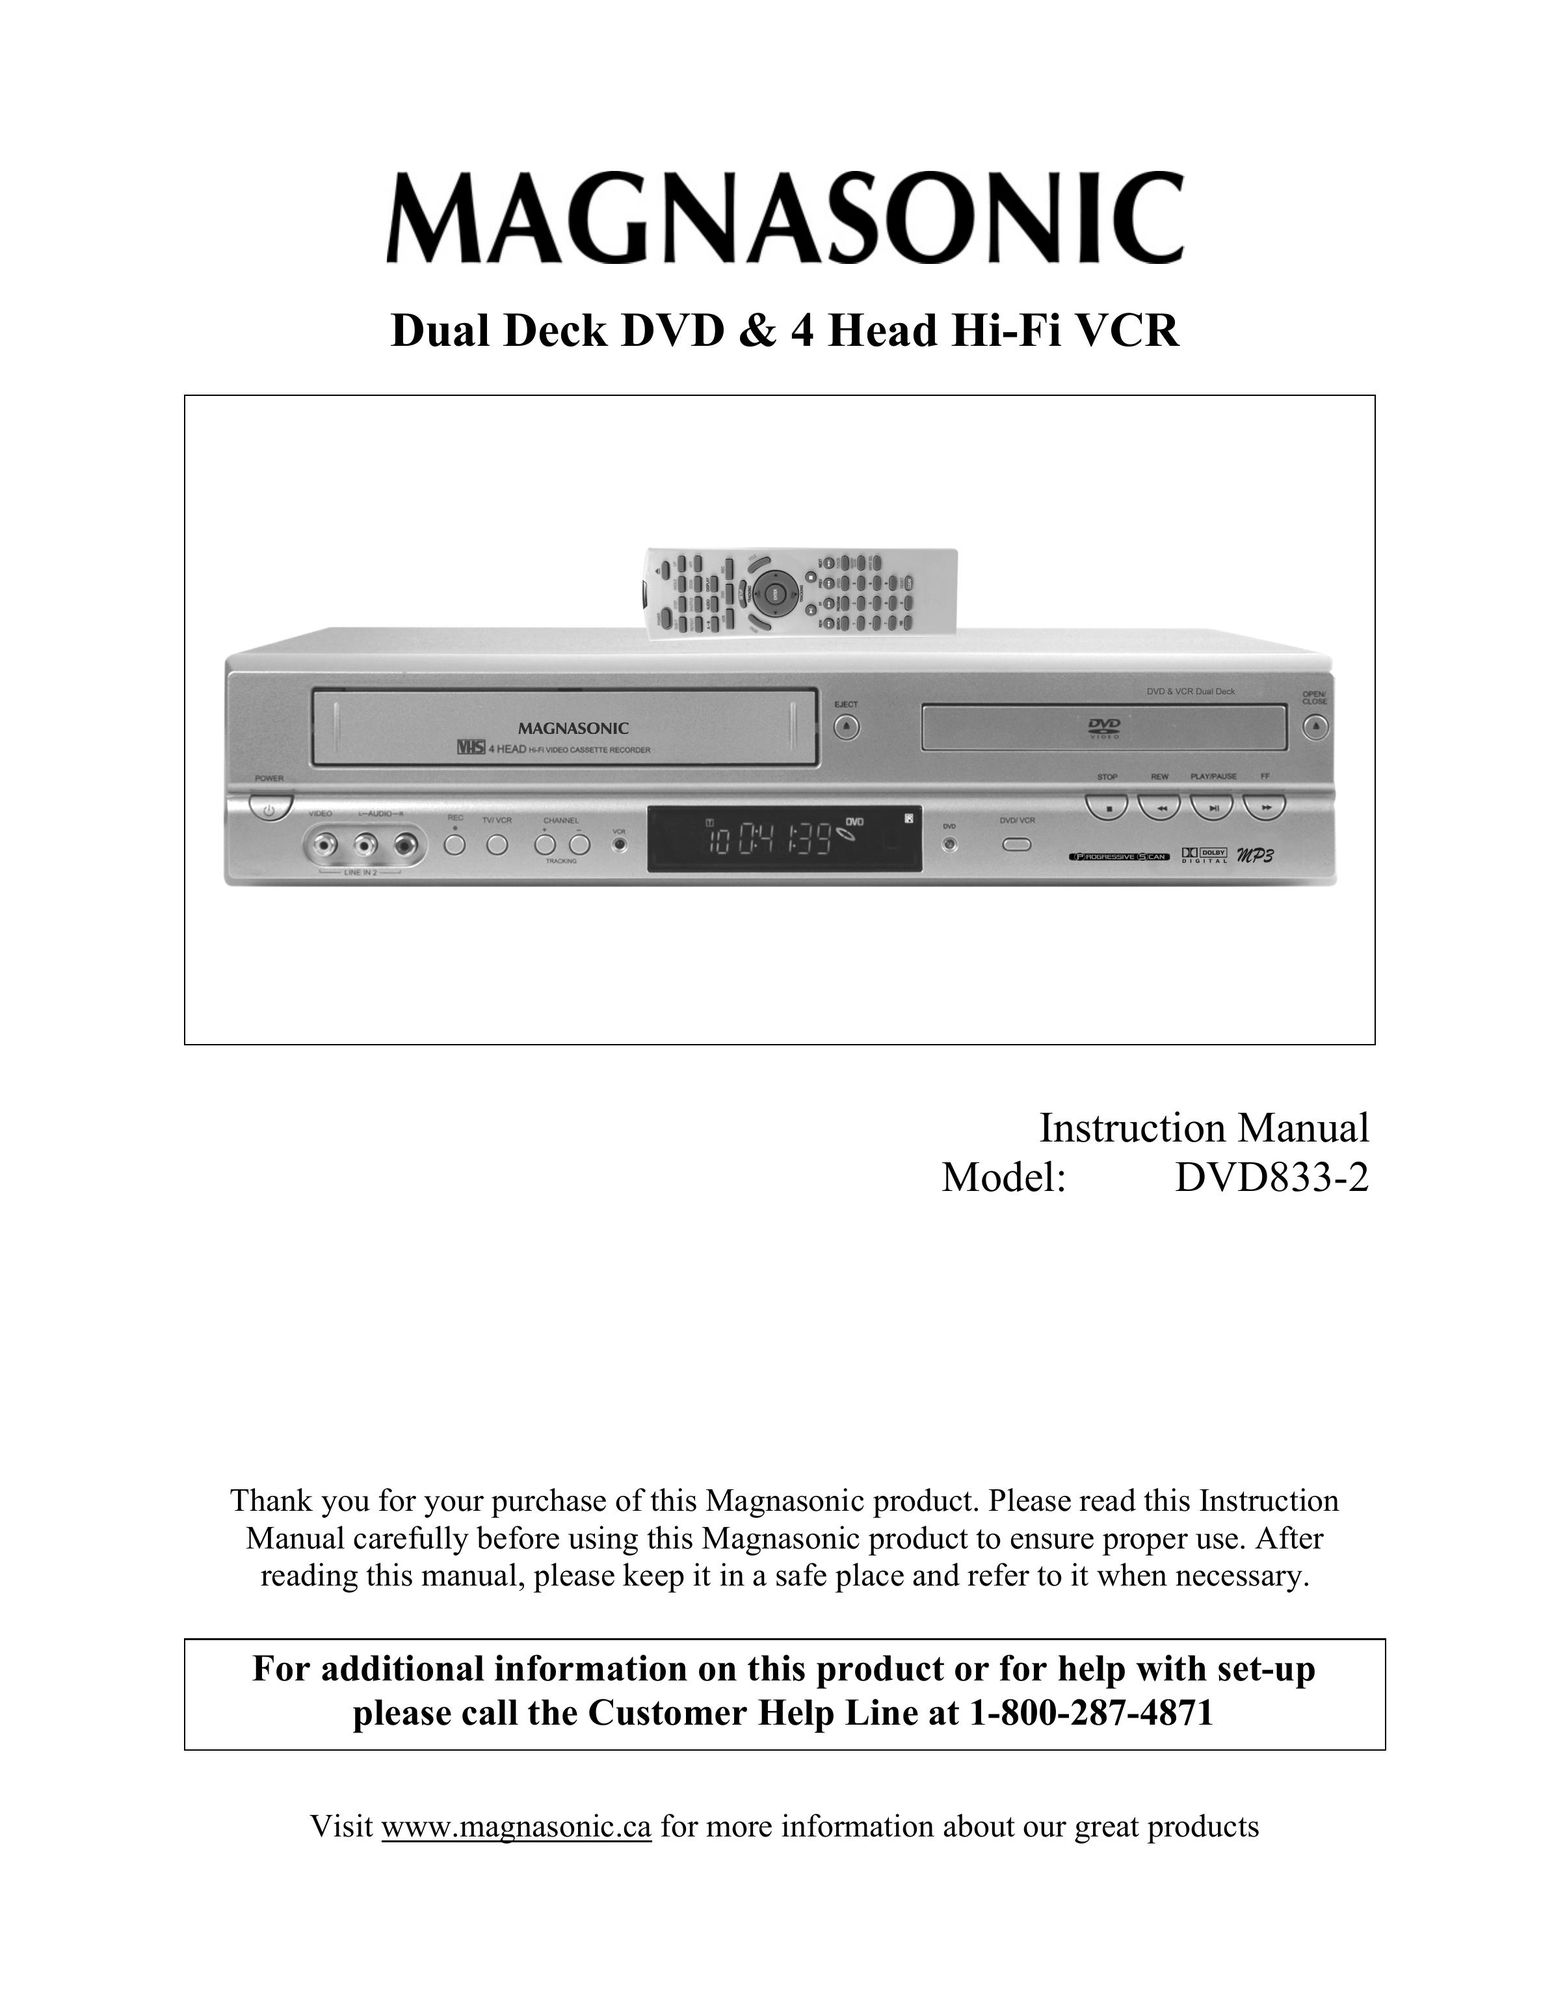 Magnasonic DVD833-2 DVD VCR Combo User Manual